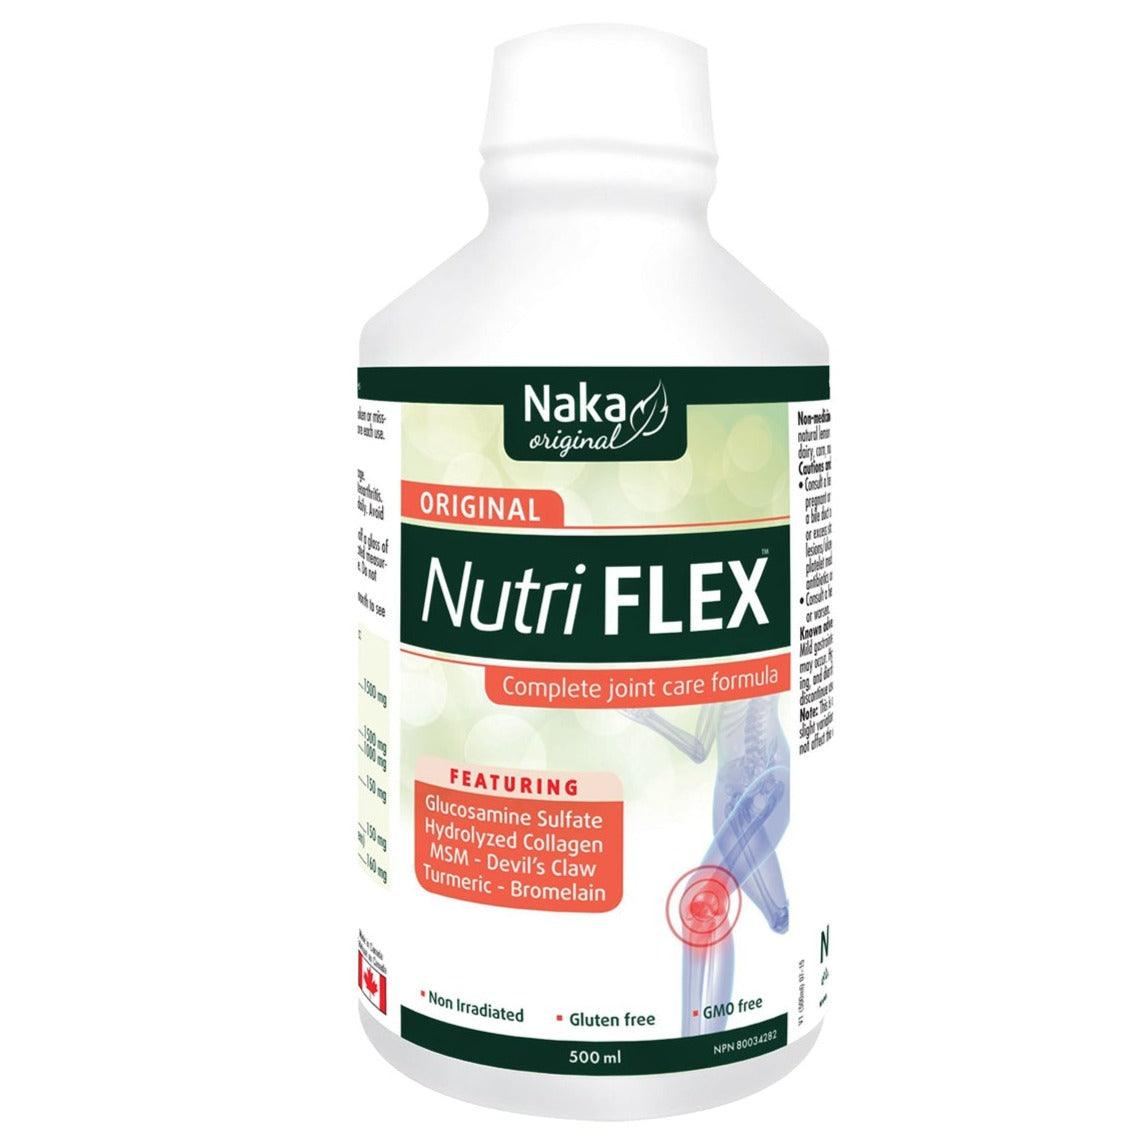 Naka Nutri Flex Original Liquid 500mL Supplements - Joint Care at Village Vitamin Store